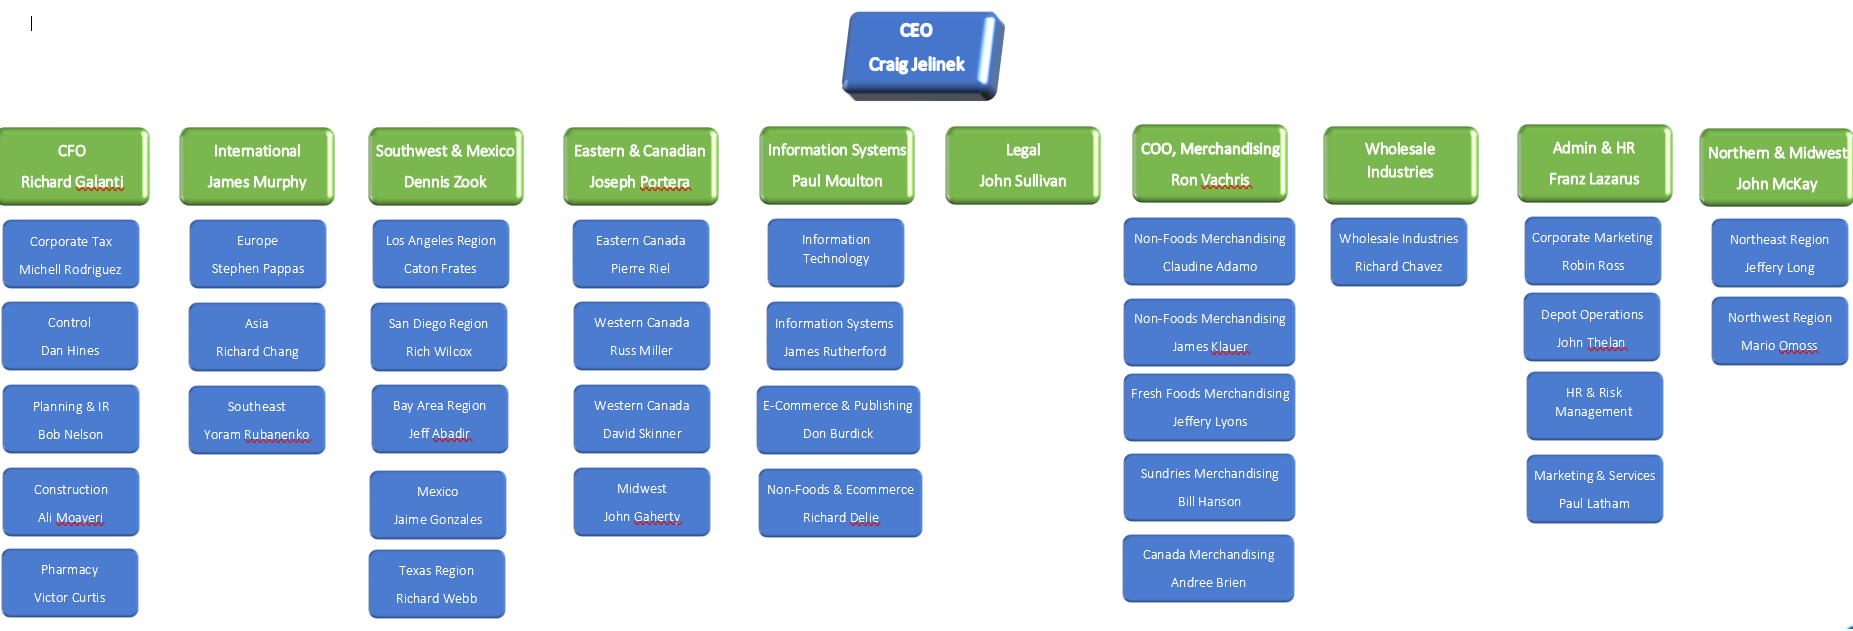 Costco Organizational Chart